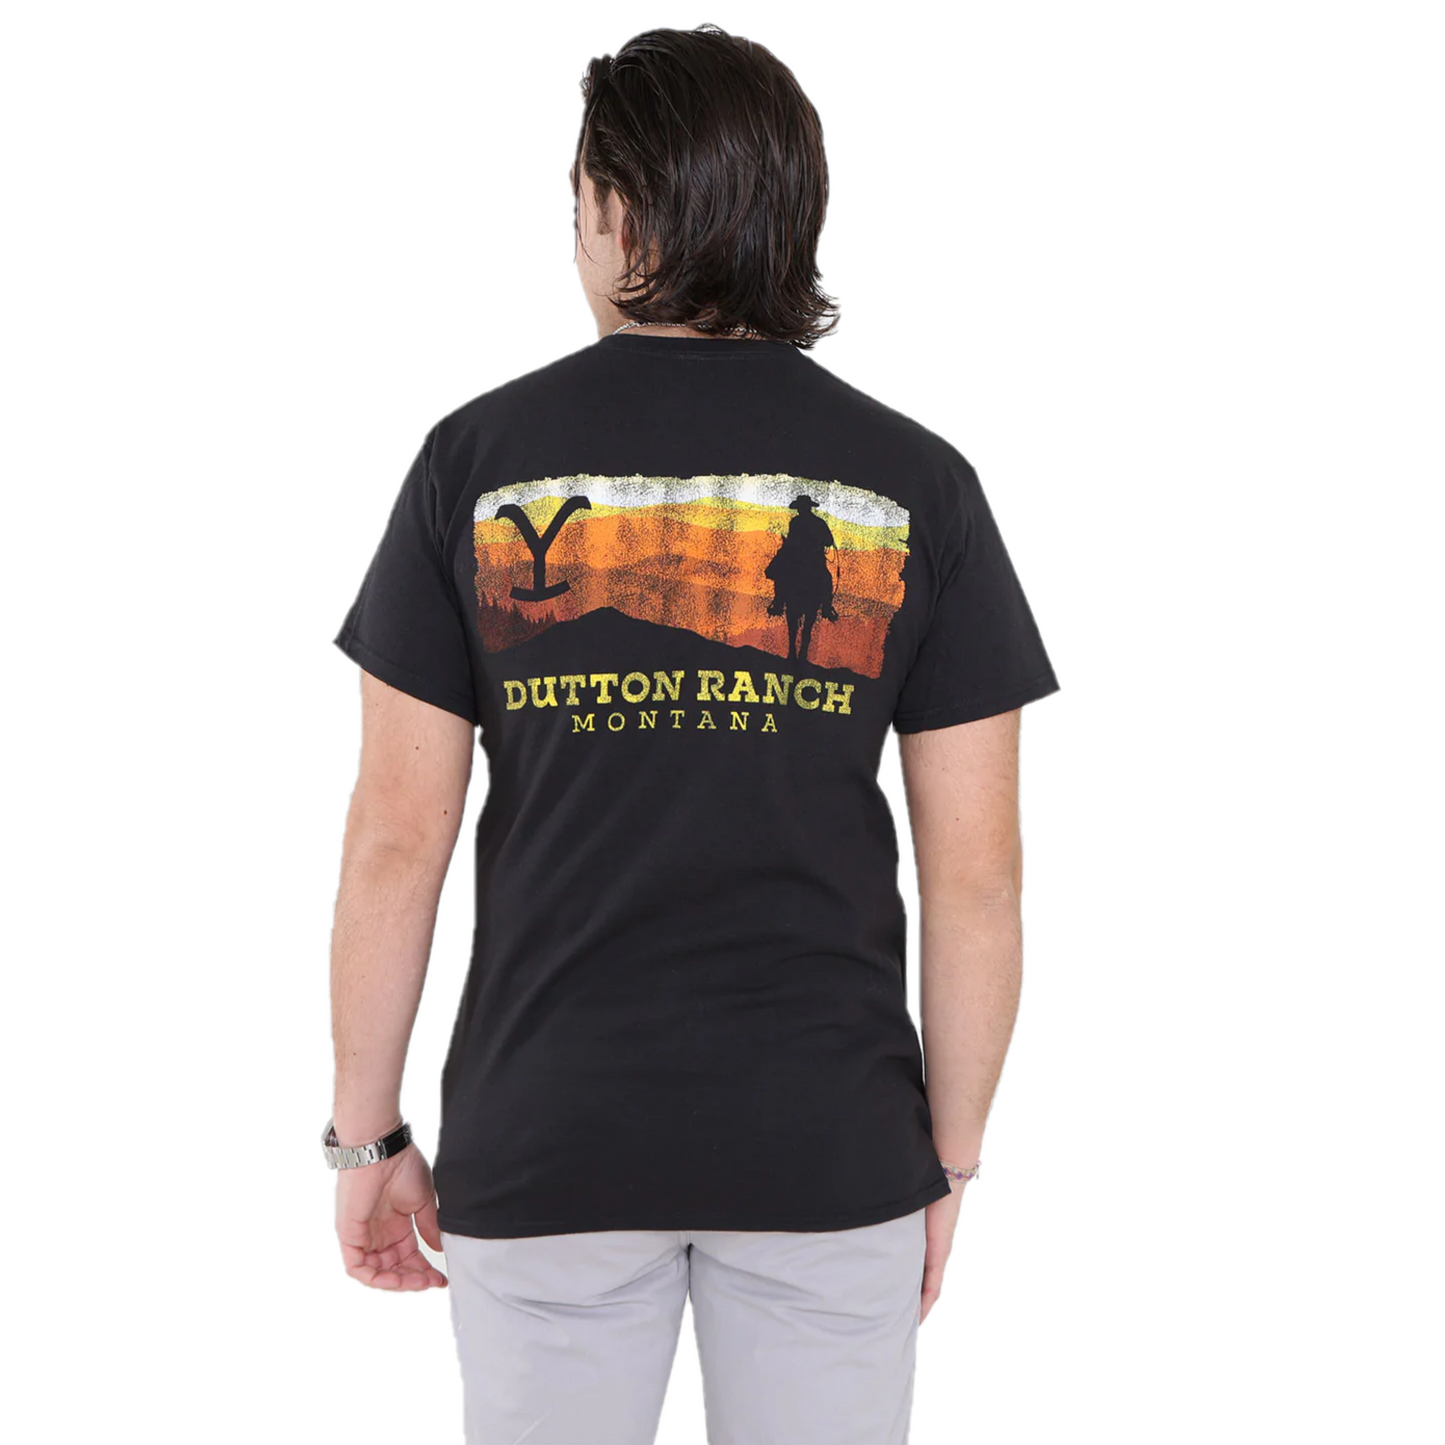 Yellowstone Men's Black Graphic Print T-Shirt 66-331-88